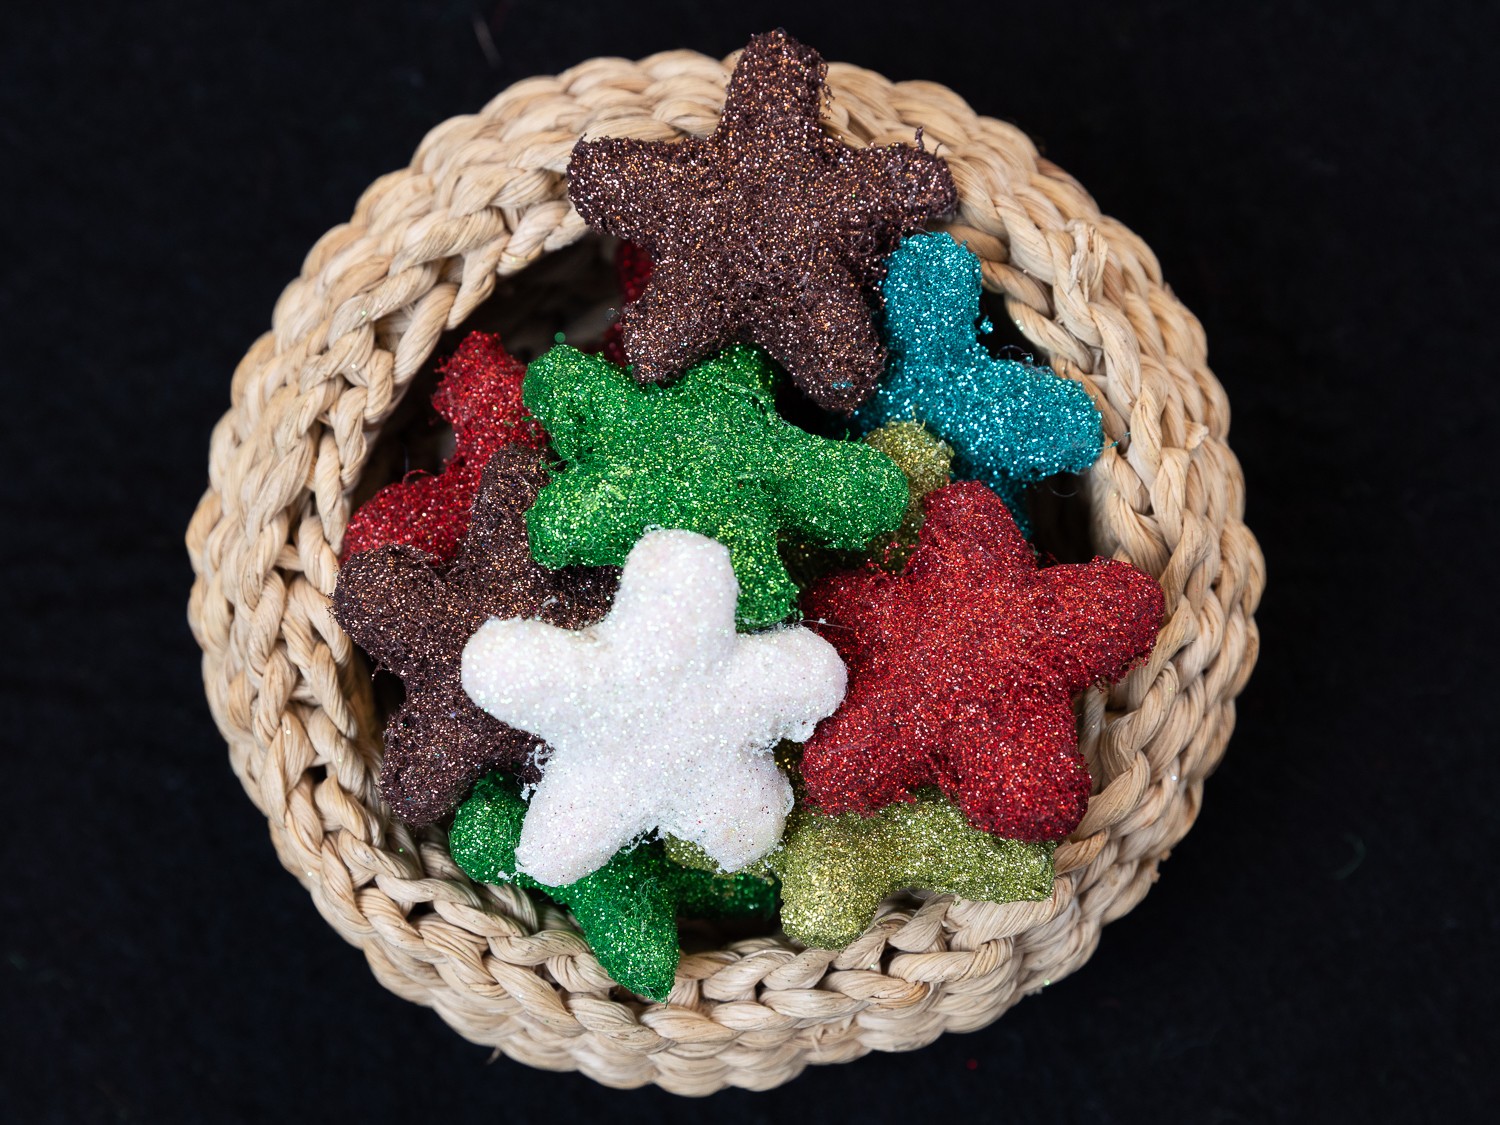 4-5cm Colorful Felted Stars for Xmas & Valentine - Felt & Yarn